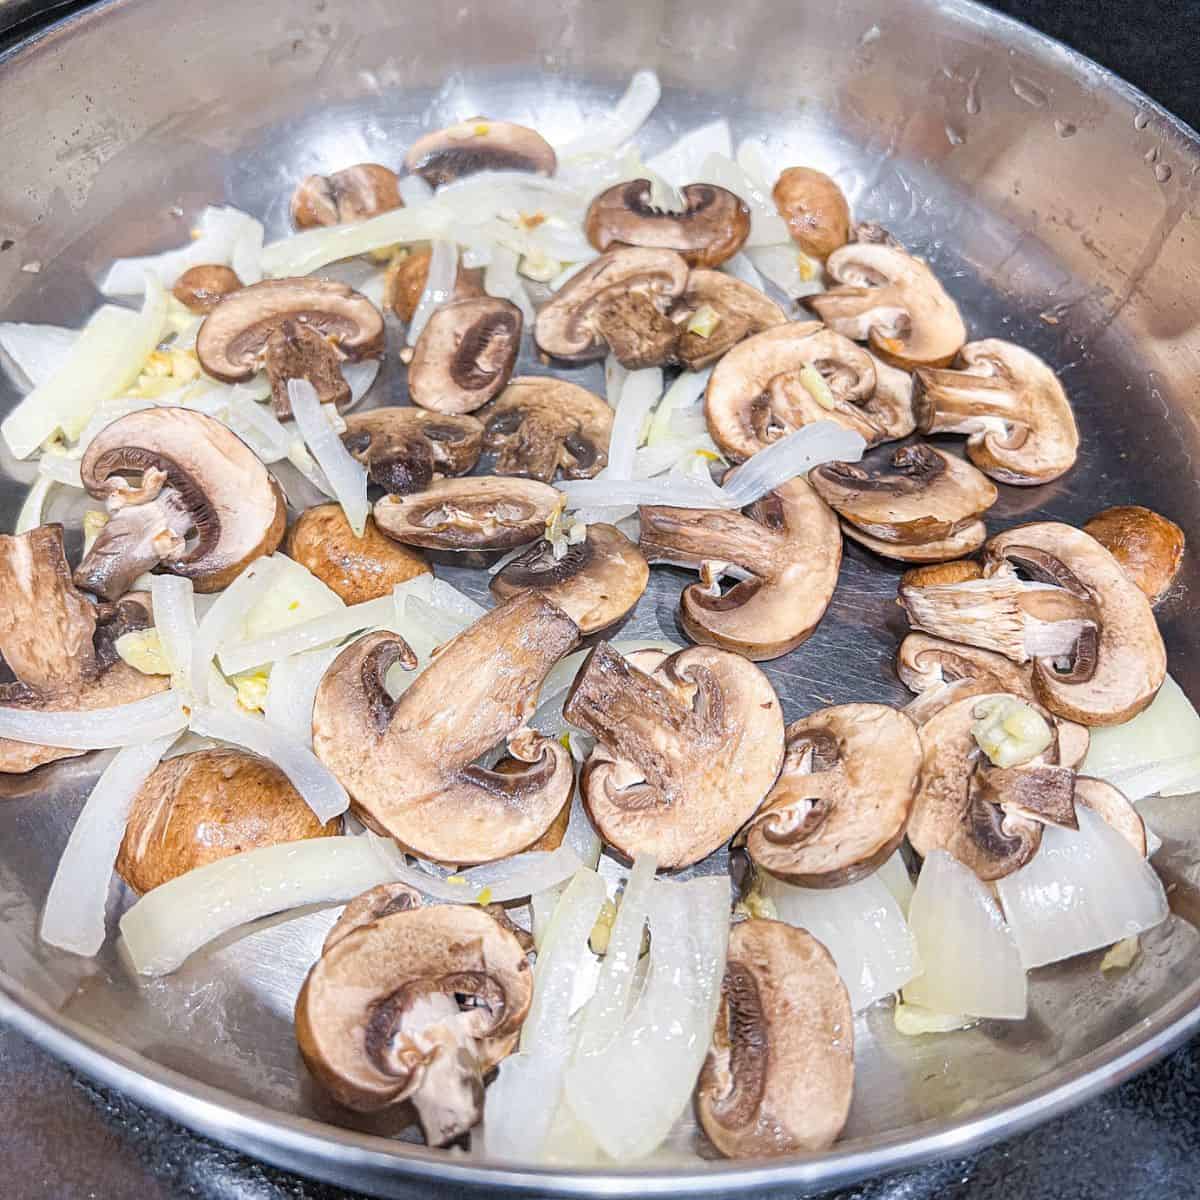 Cooking onion, garlic and mushrooms.